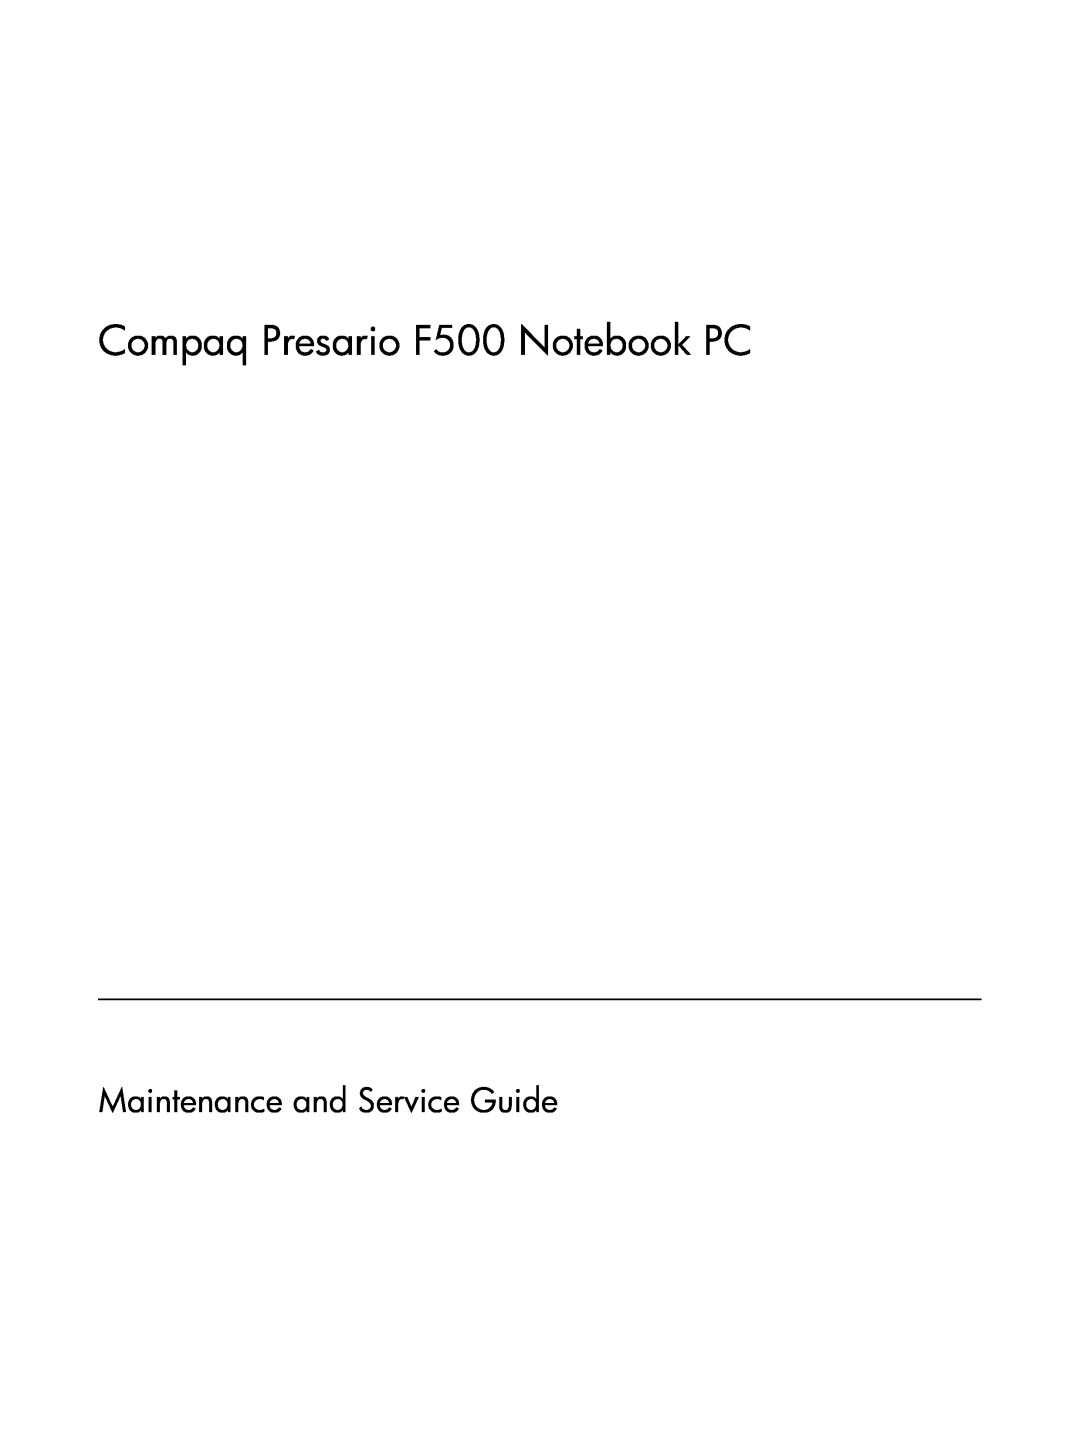 Compaq manual Compaq Presario F500 Notebook PC, Maintenance and Service Guide 